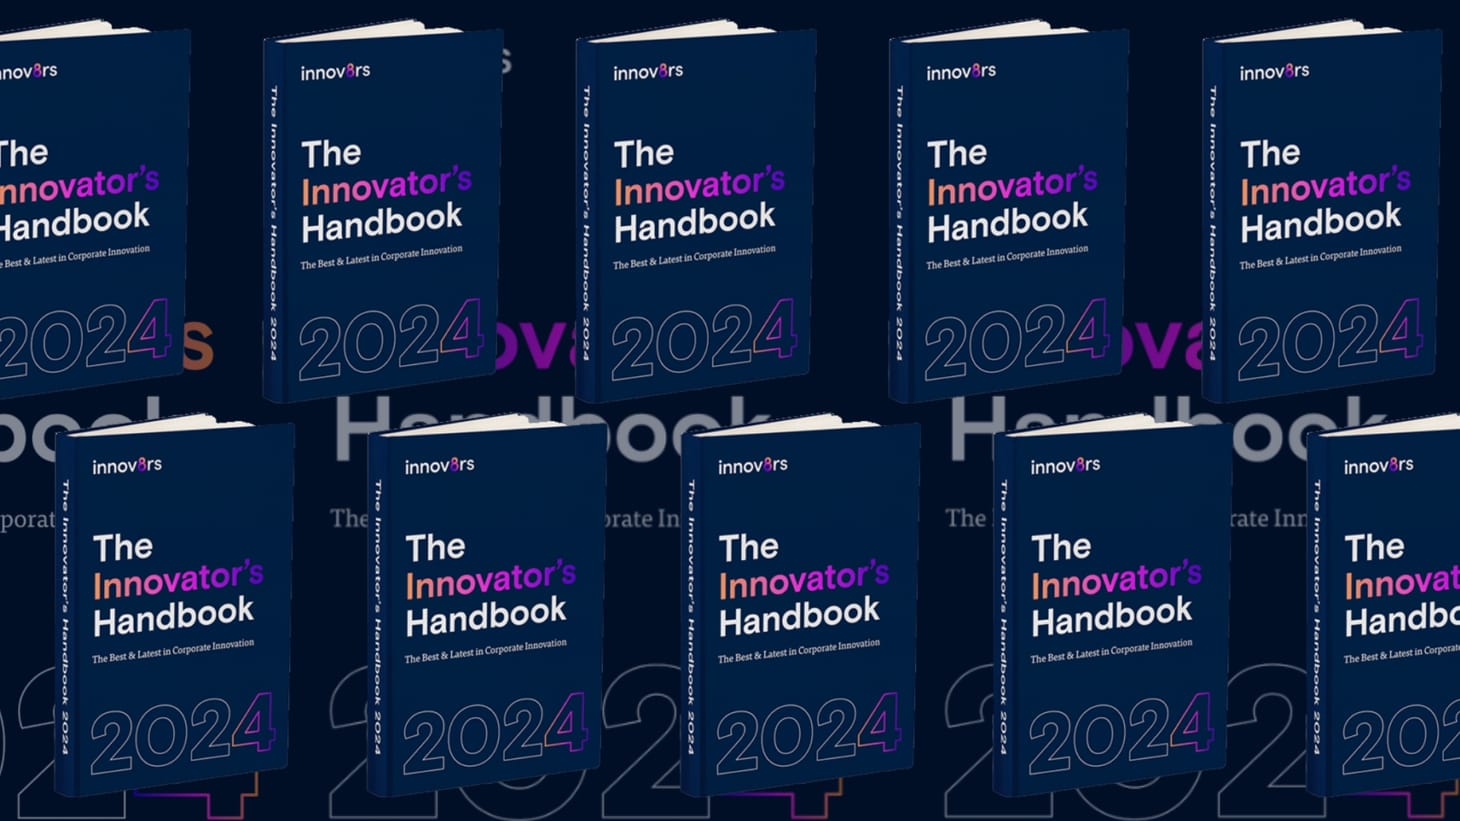 The Innovator's Handbook 2024